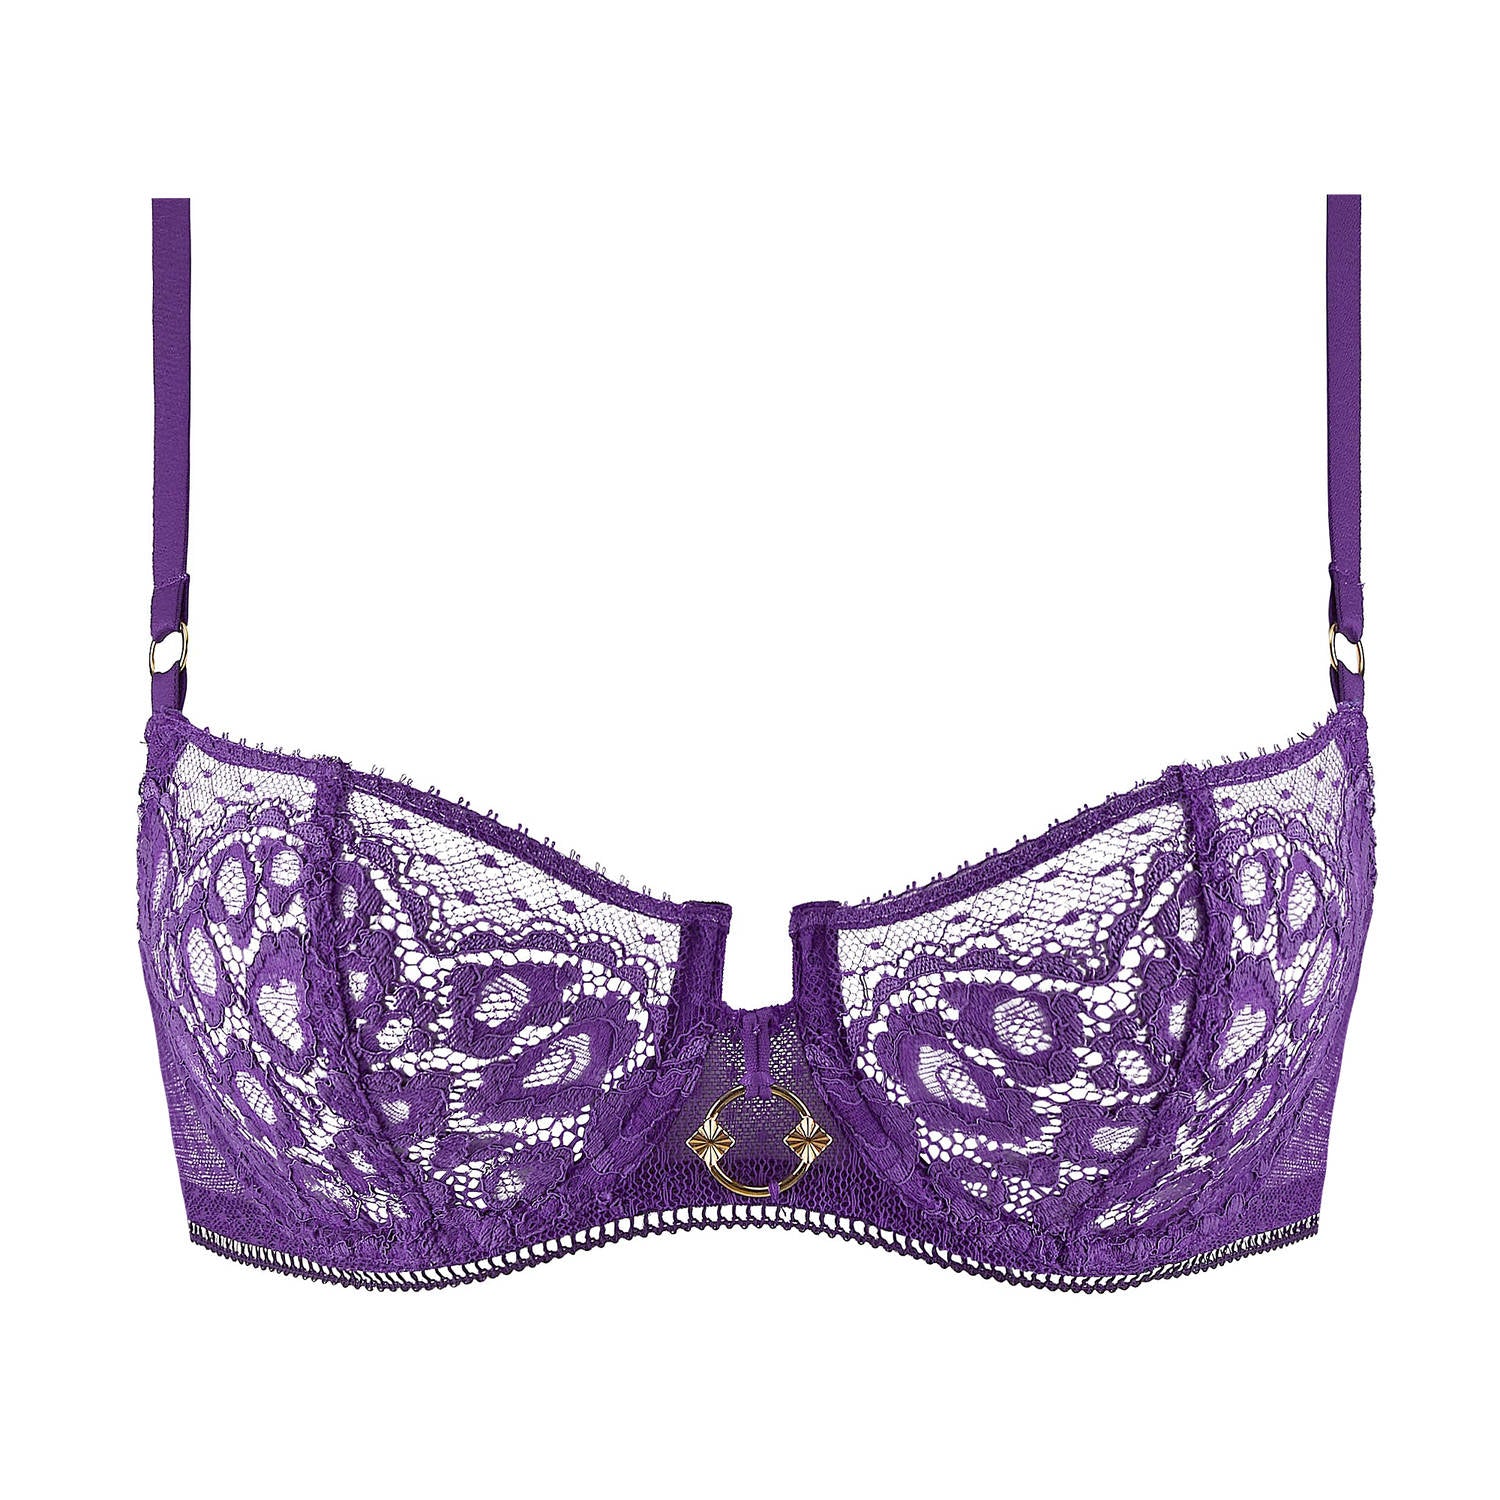 Victoria's Secret purple lace Very Sexy push-up bra size 32D - $23